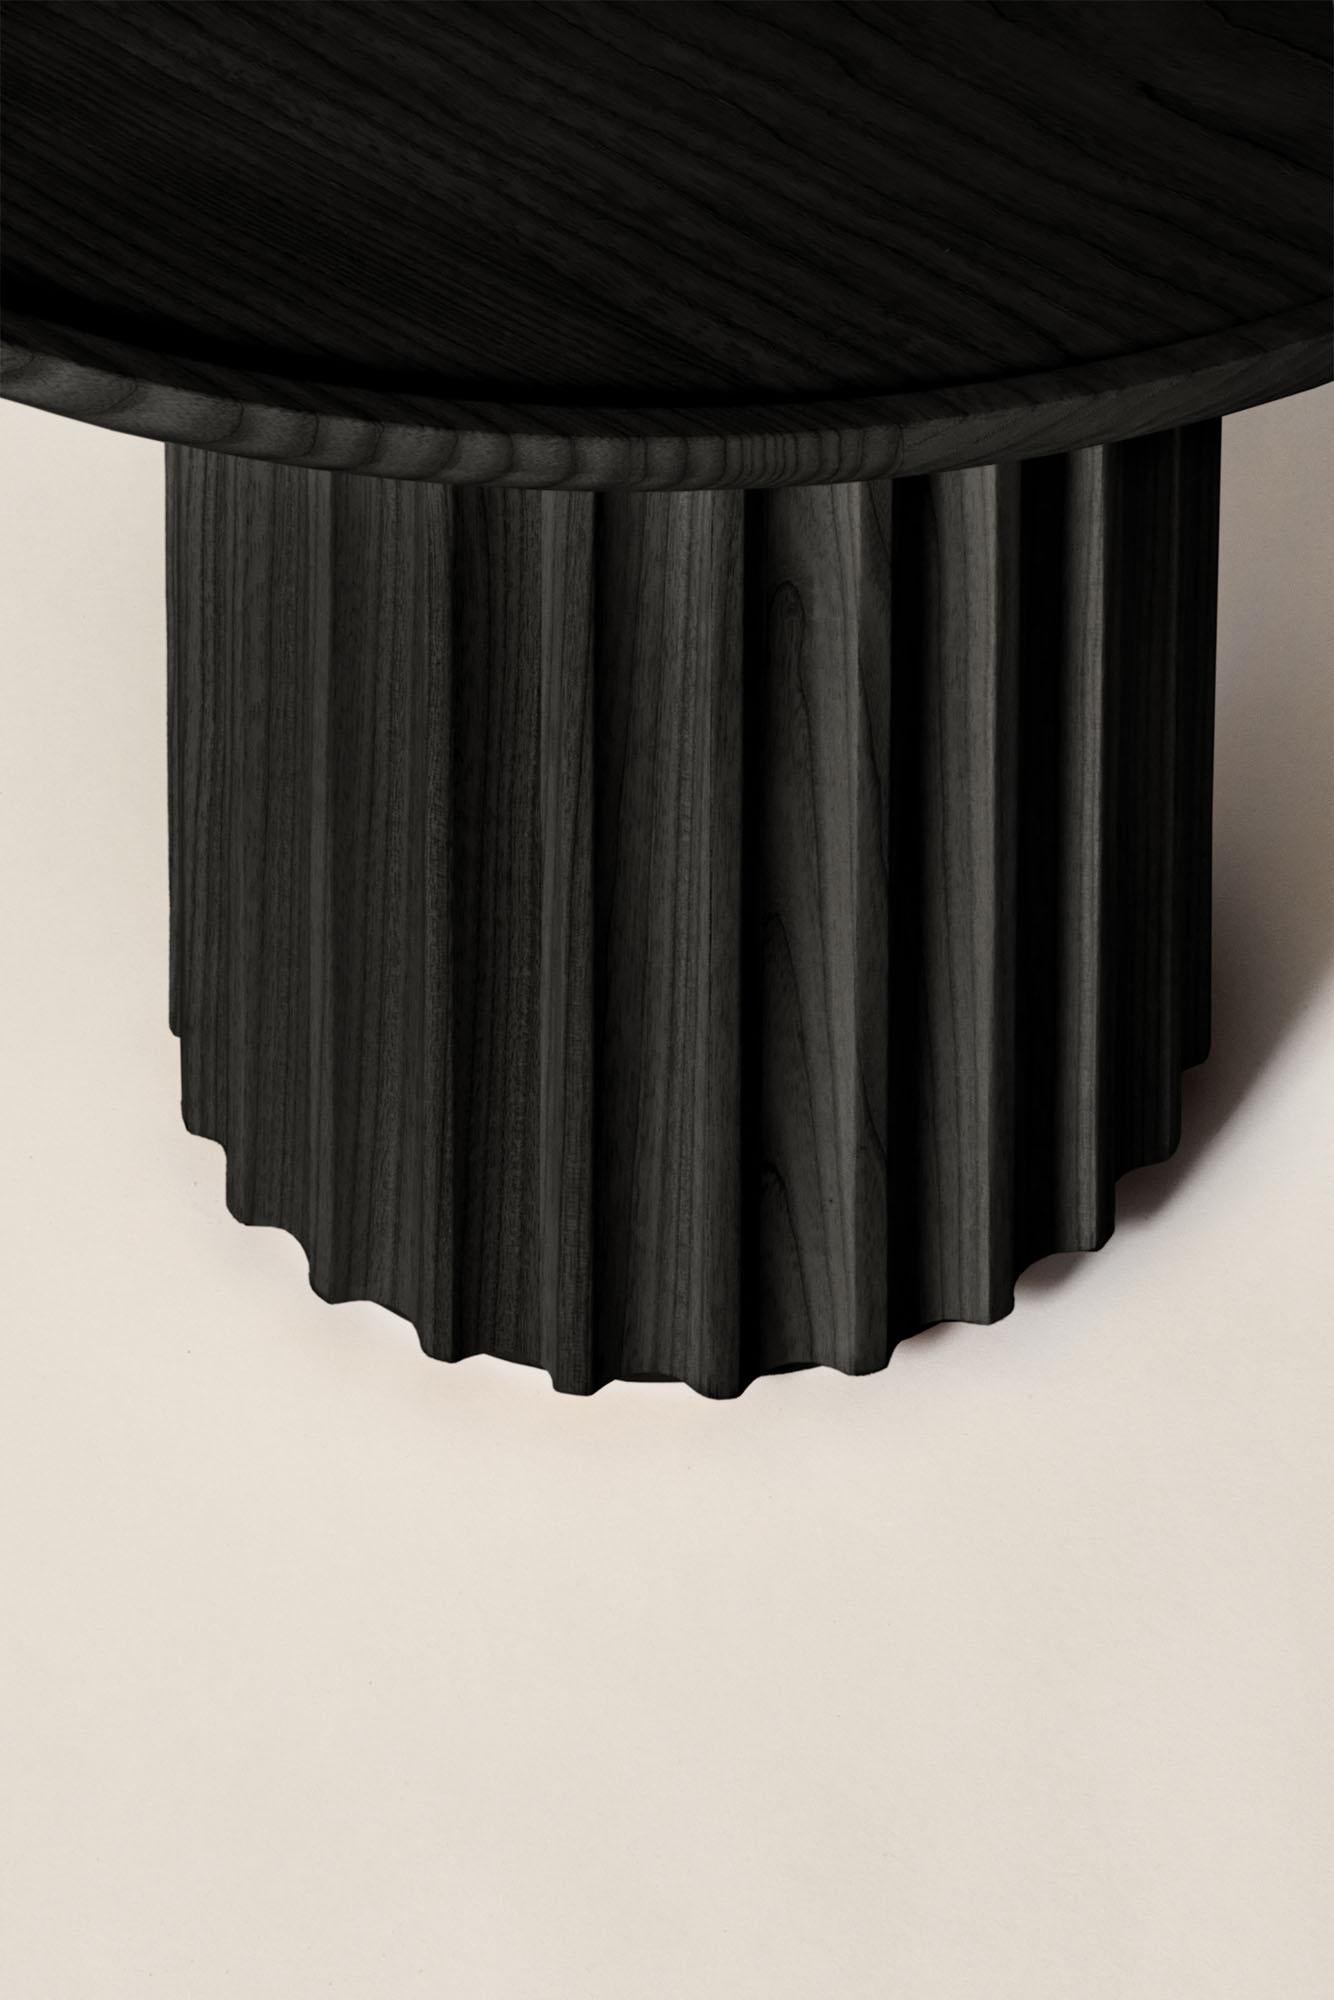 Capitello Solid Wood Coffee Table, Ash in Black Finish, Contemporary For Sale 6